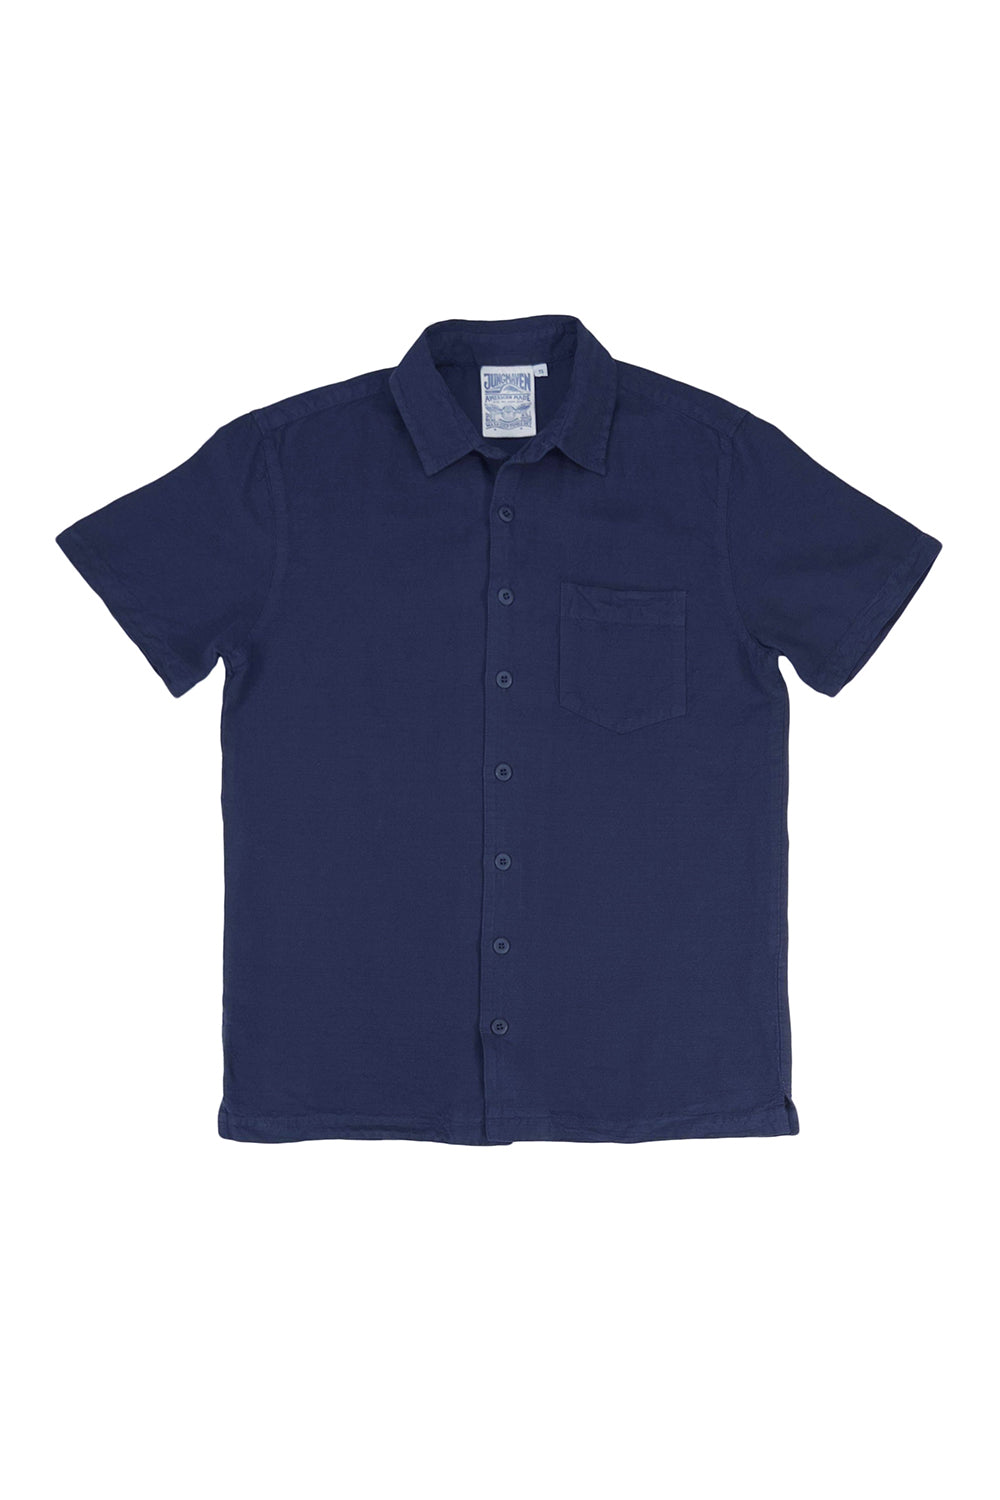 Rincon Shirt | Jungmaven Hemp Clothing & Accessories / Color: Navy